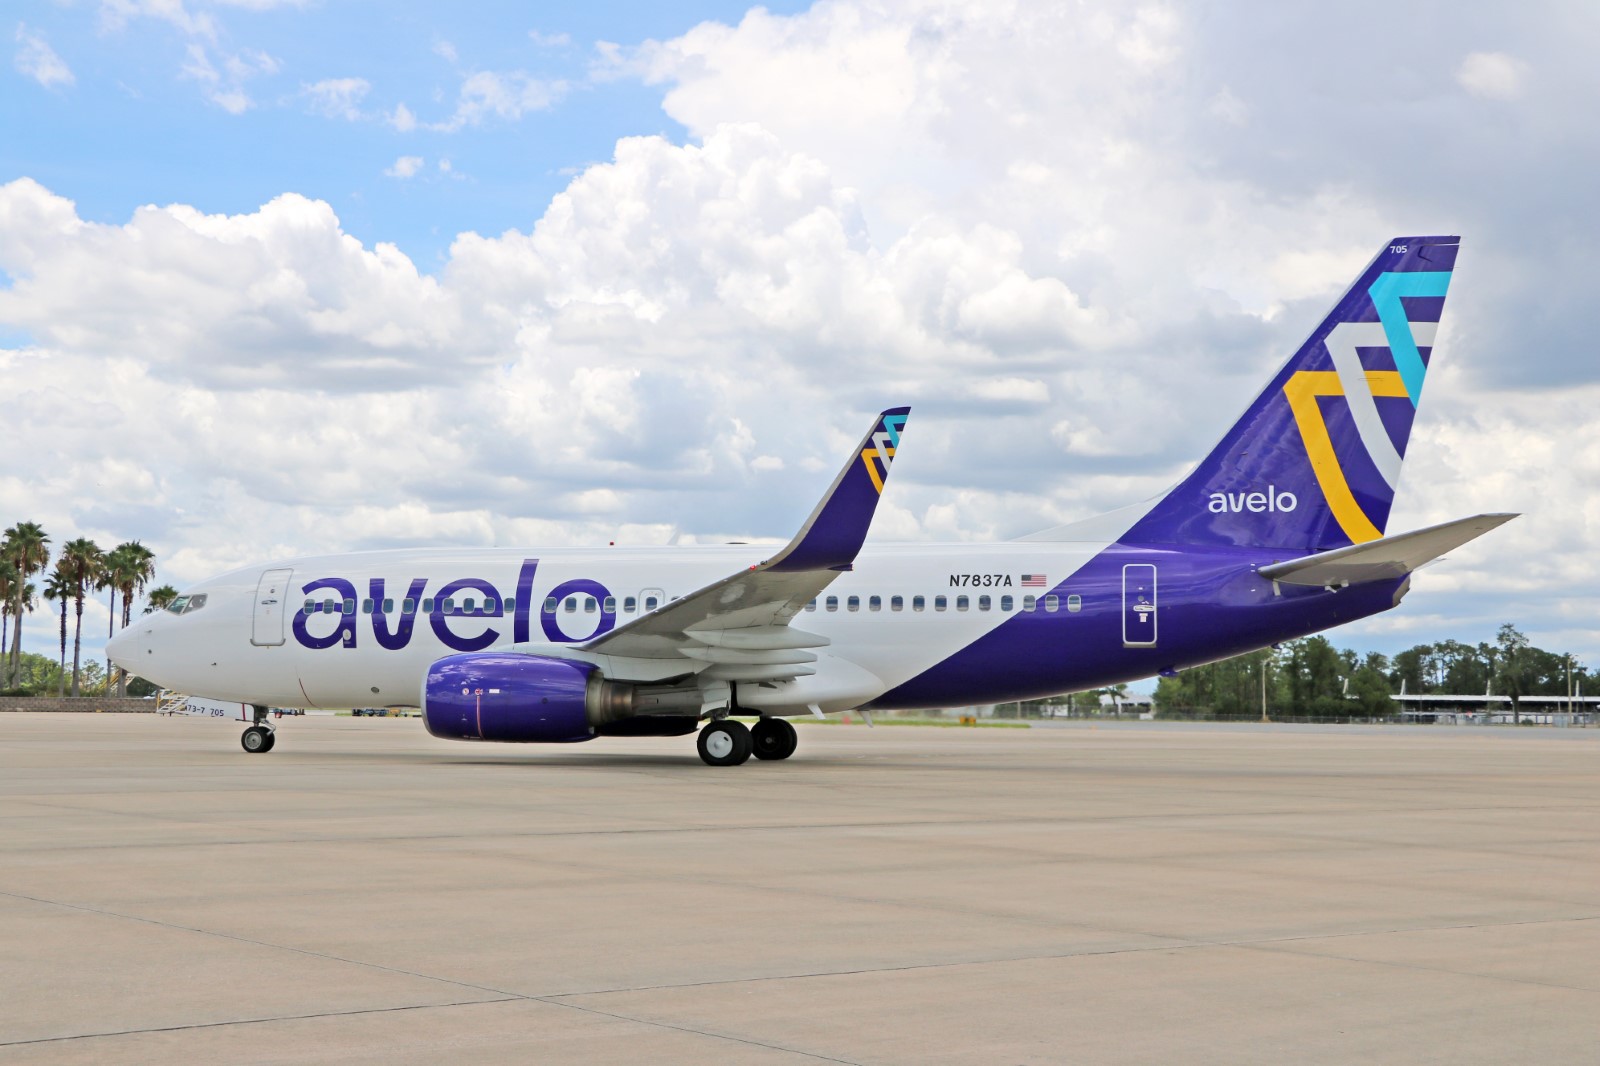 Avelo Airlines New Orlando Base Takes Flight